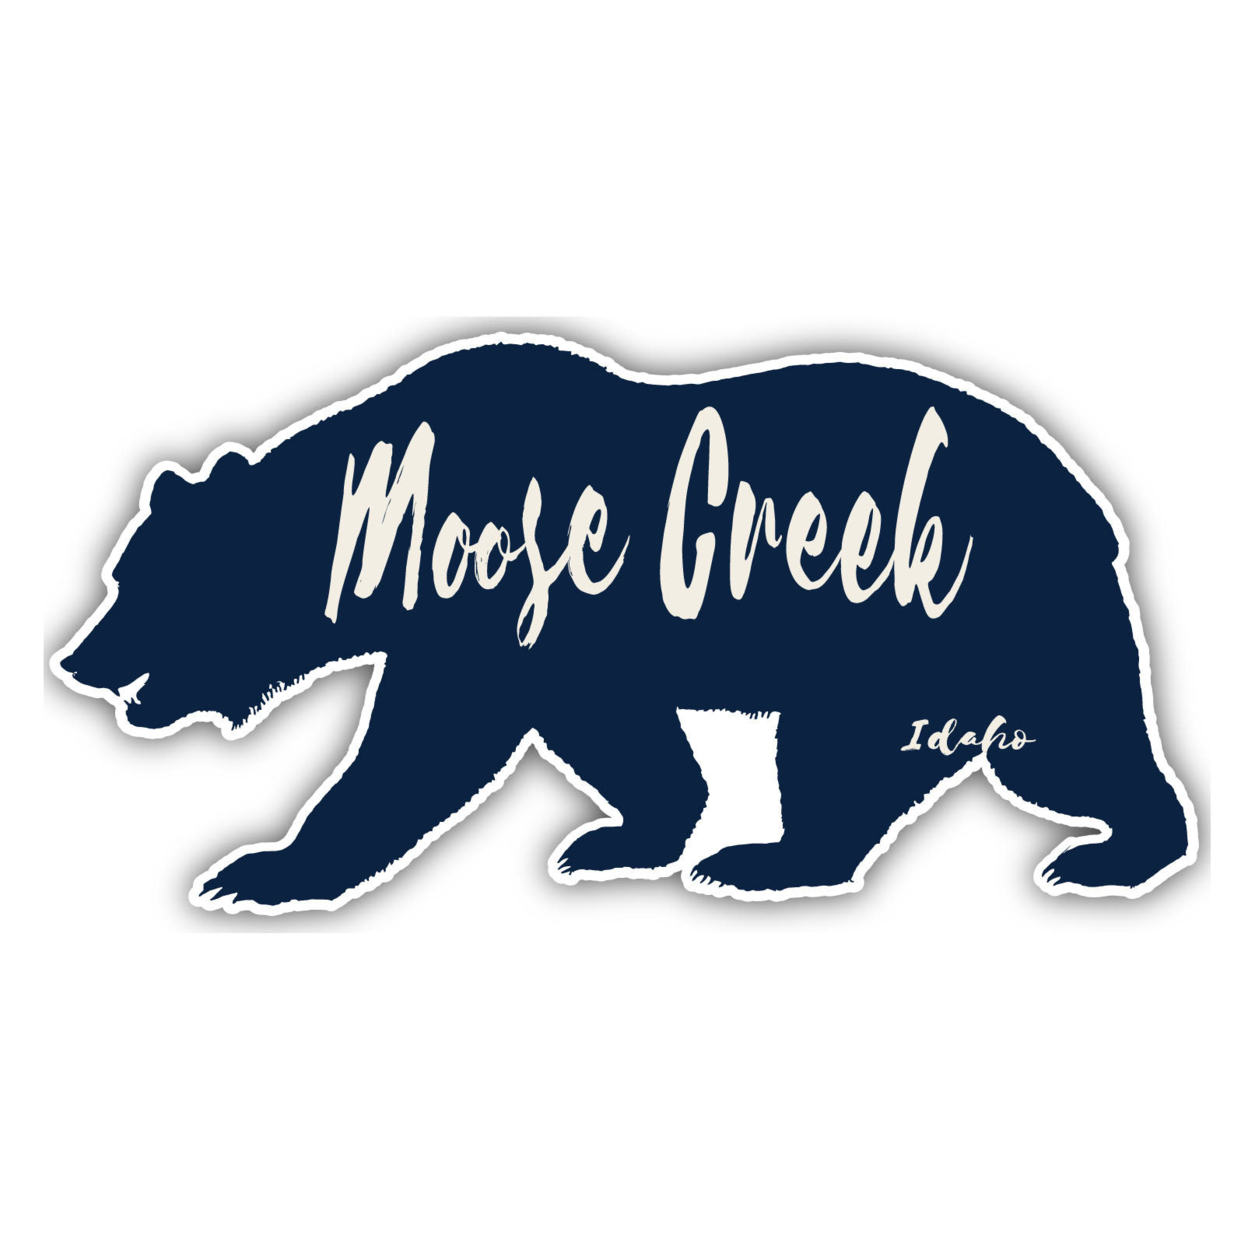 Moose Creek Idaho Souvenir Decorative Stickers (Choose Theme And Size) - Single Unit, 4-Inch, Bear